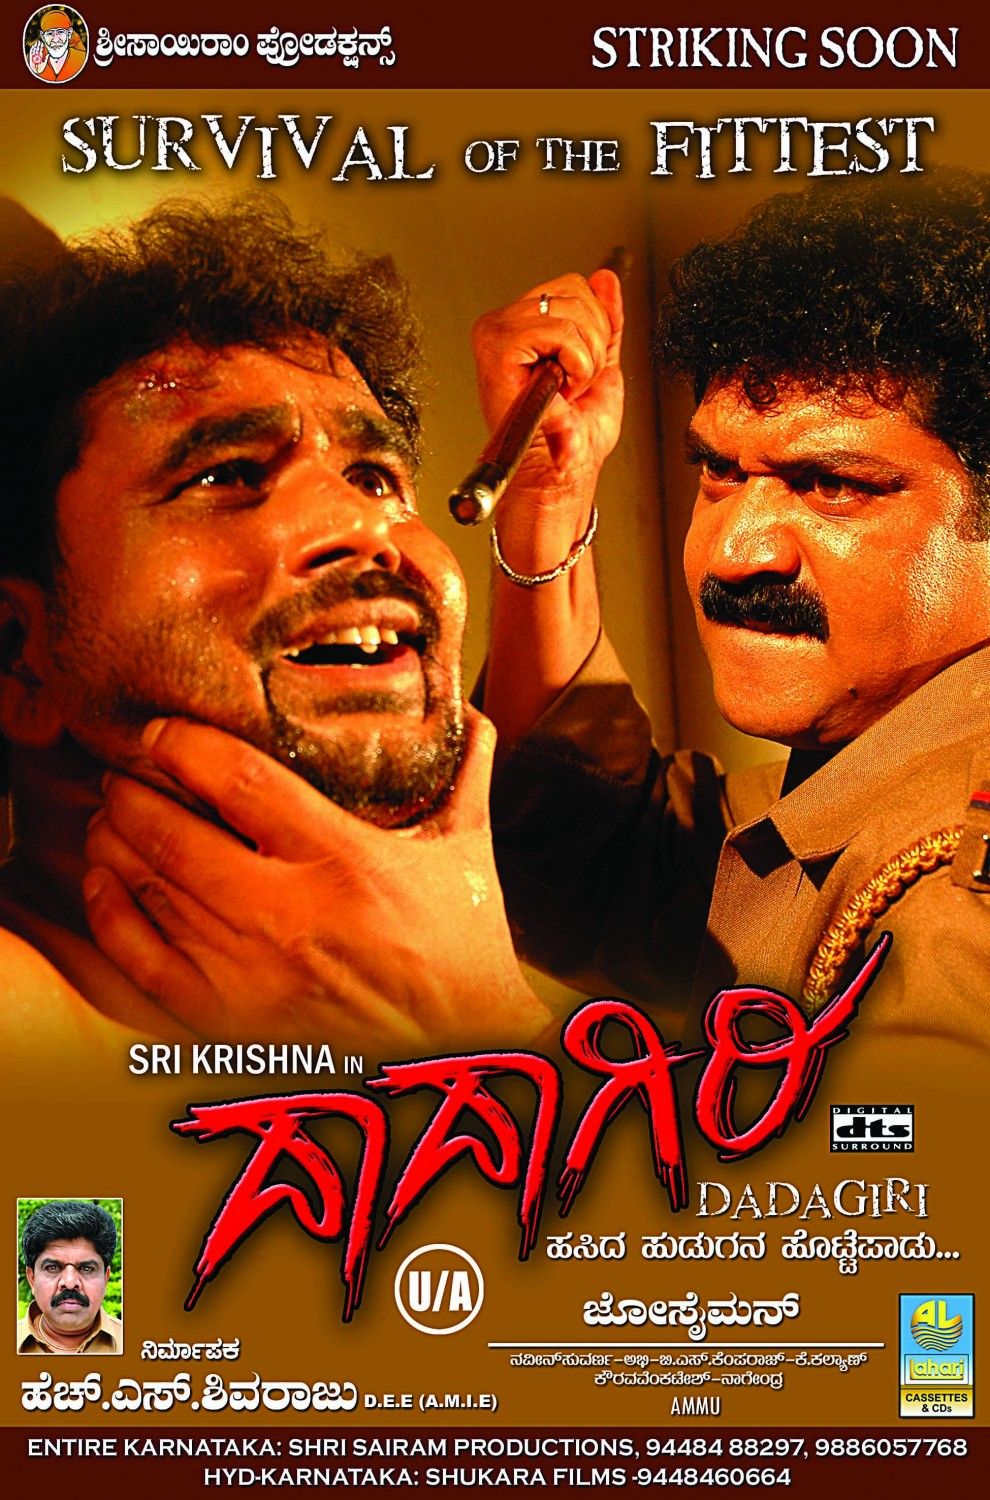 Extra Large Movie Poster Image for Dadagiri (#2 of 2)